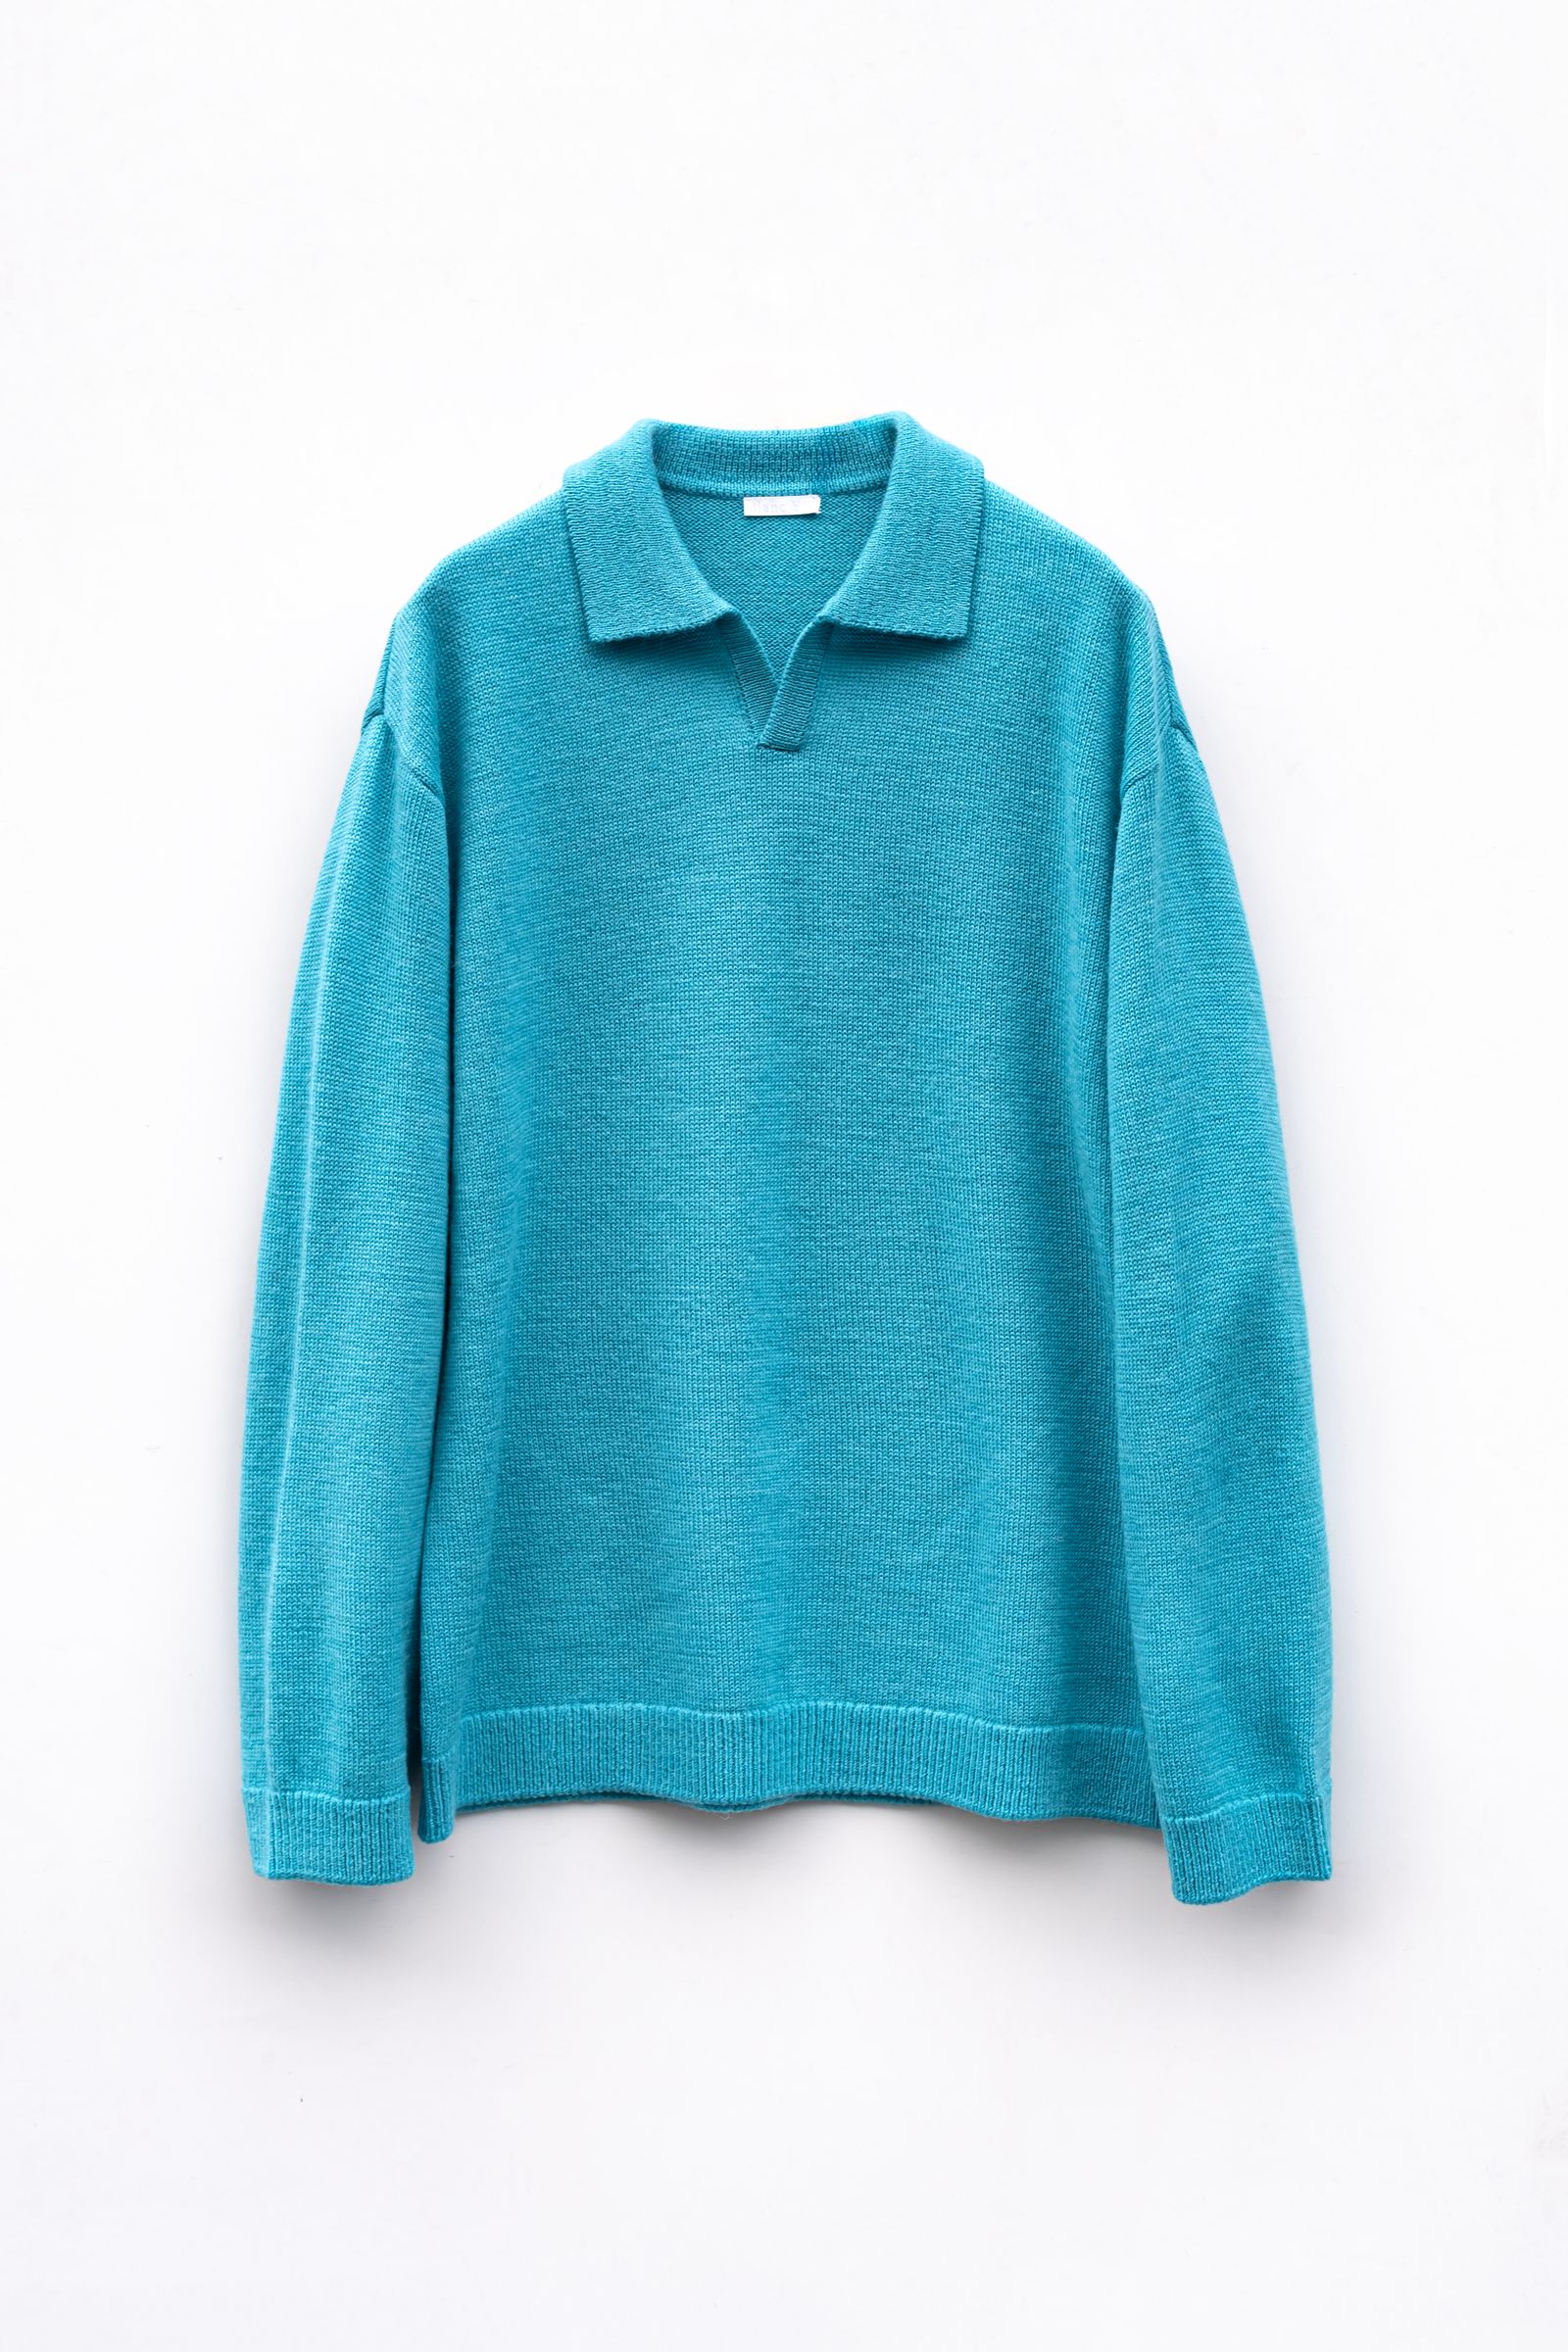 Blanc YM - Wool Knit skipper Shirt / Gray | Retikle Online Store